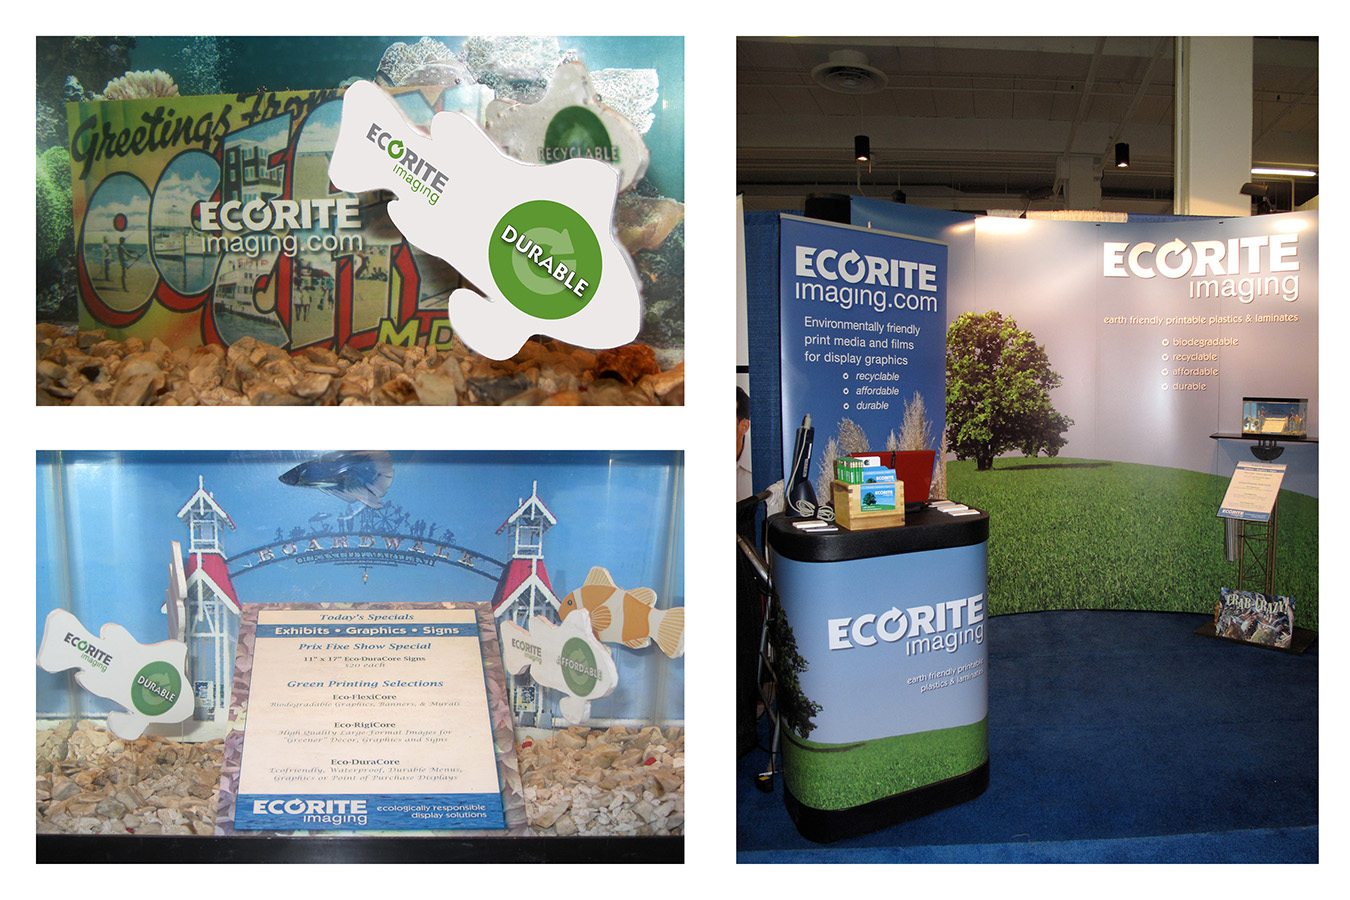 ecorite 17 : Printed biodegradable products demonstrate durability in aquarium display